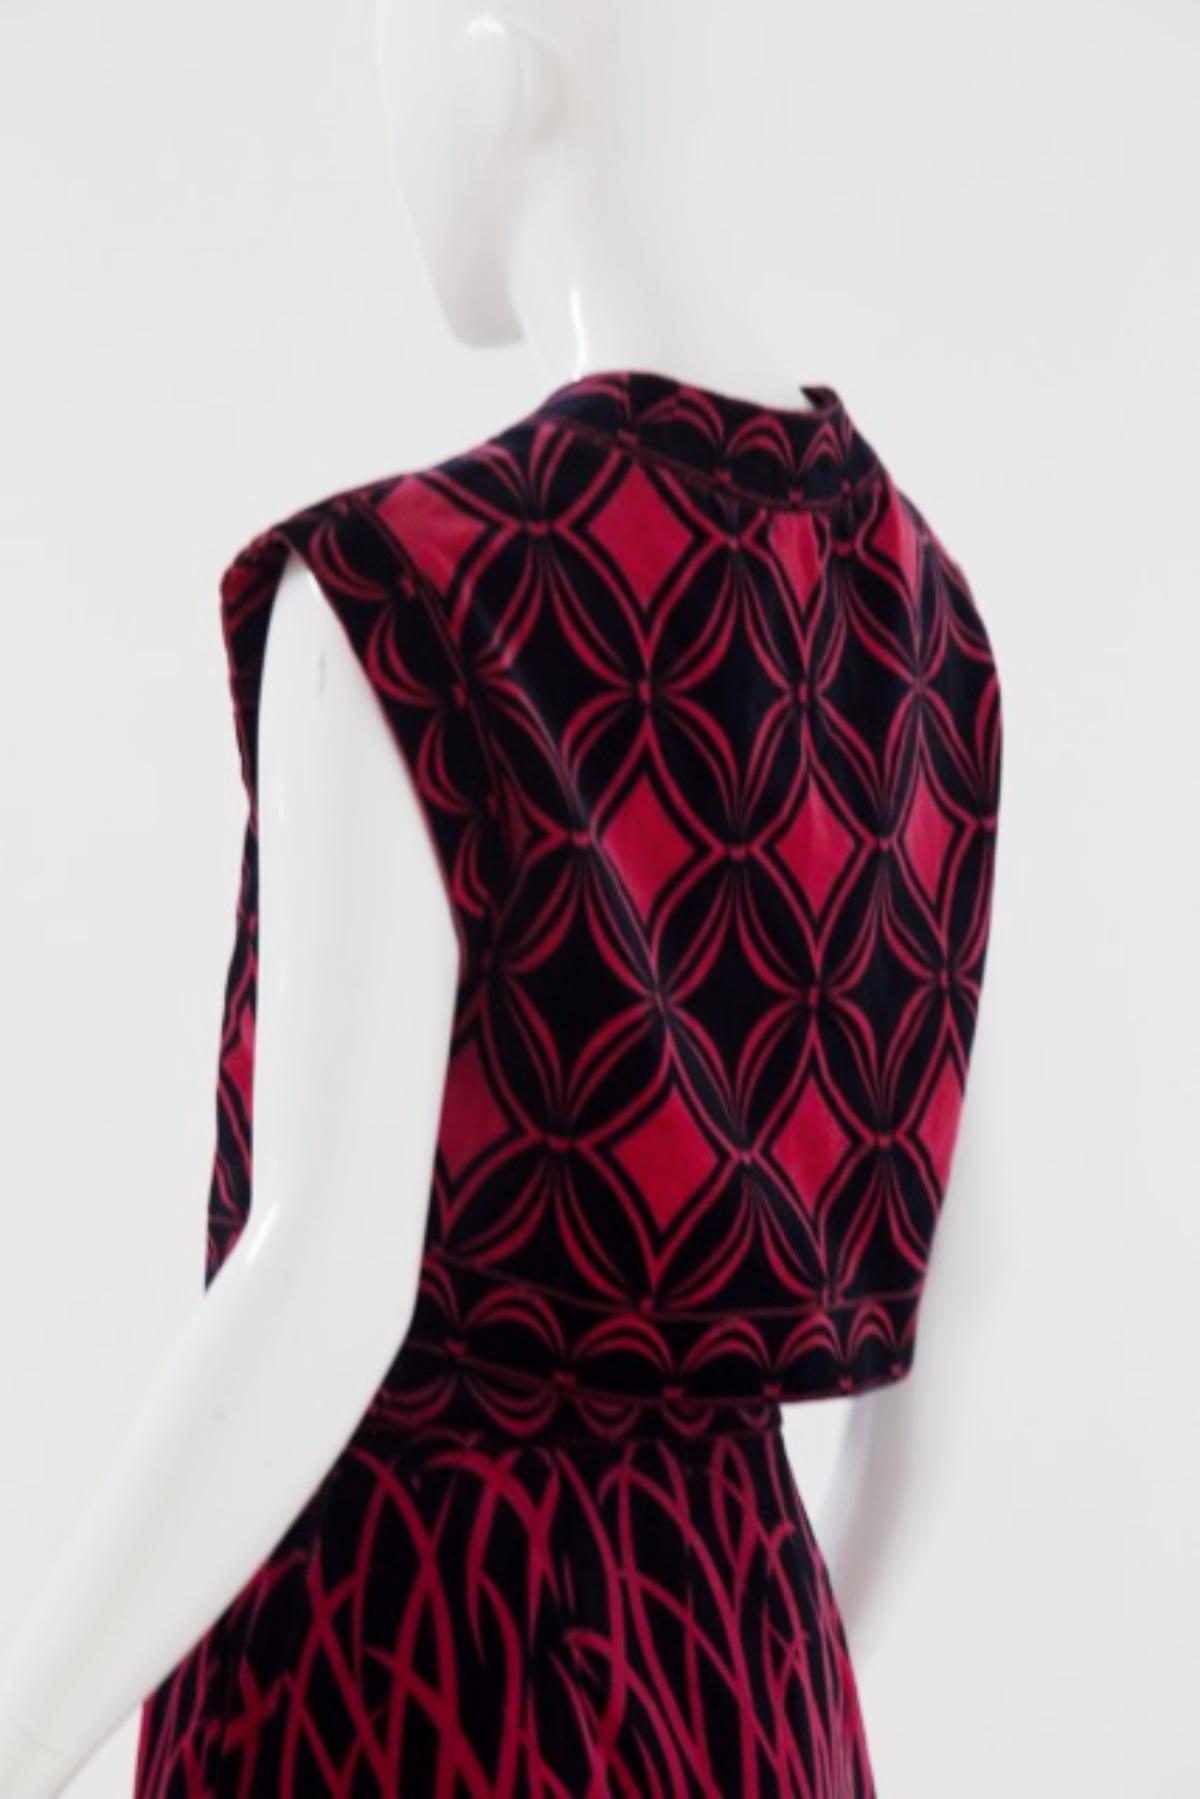 Emilio Pucci Psychedelic Velvet Two Pieces Suit For Sale 6